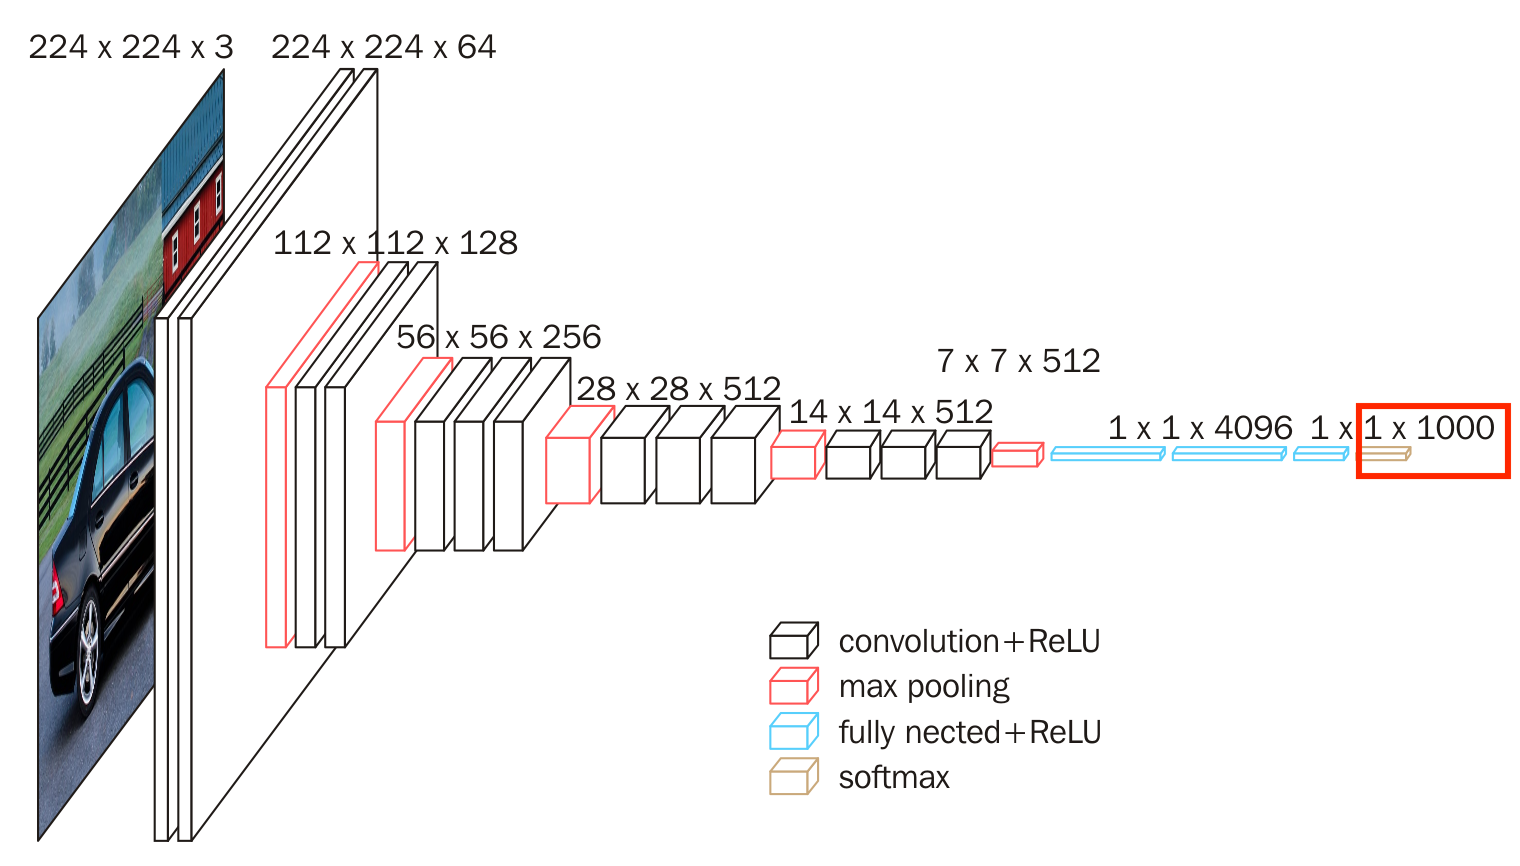 VGG16是一个图像分类网络，Softmax是VGG16的最后一层，Softmax层的前面是全连接层，Softmax层也是整个VGG16神经网络的输出，输出的是多分类的概率分布